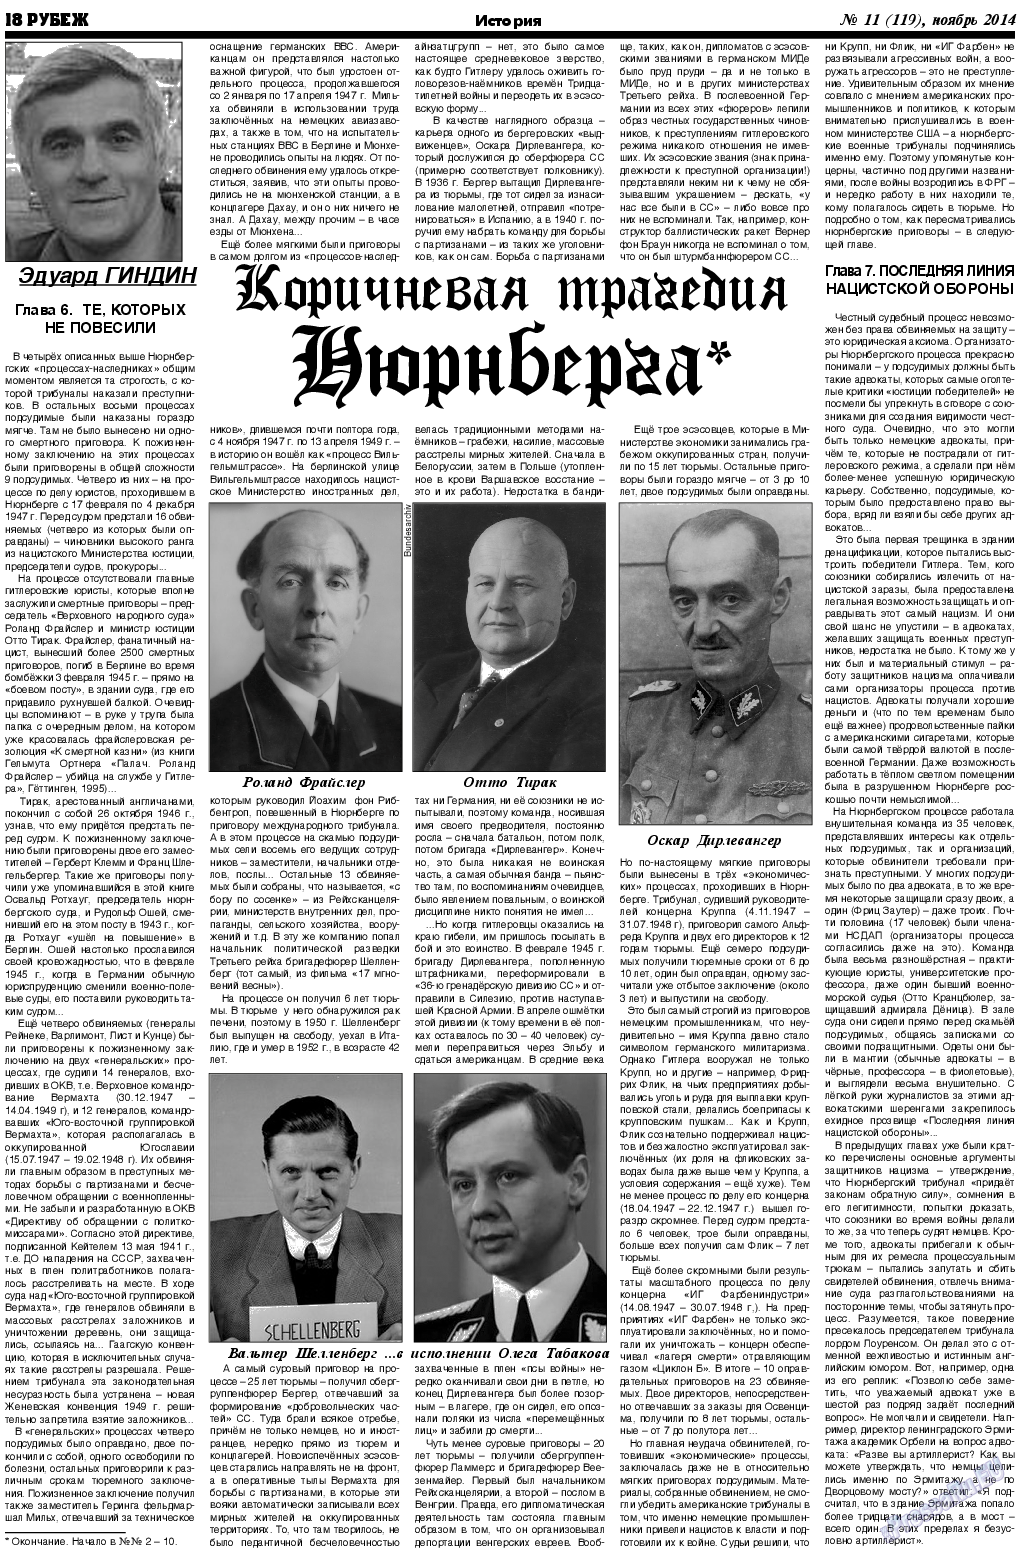 Рубеж, газета. 2014 №11 стр.18